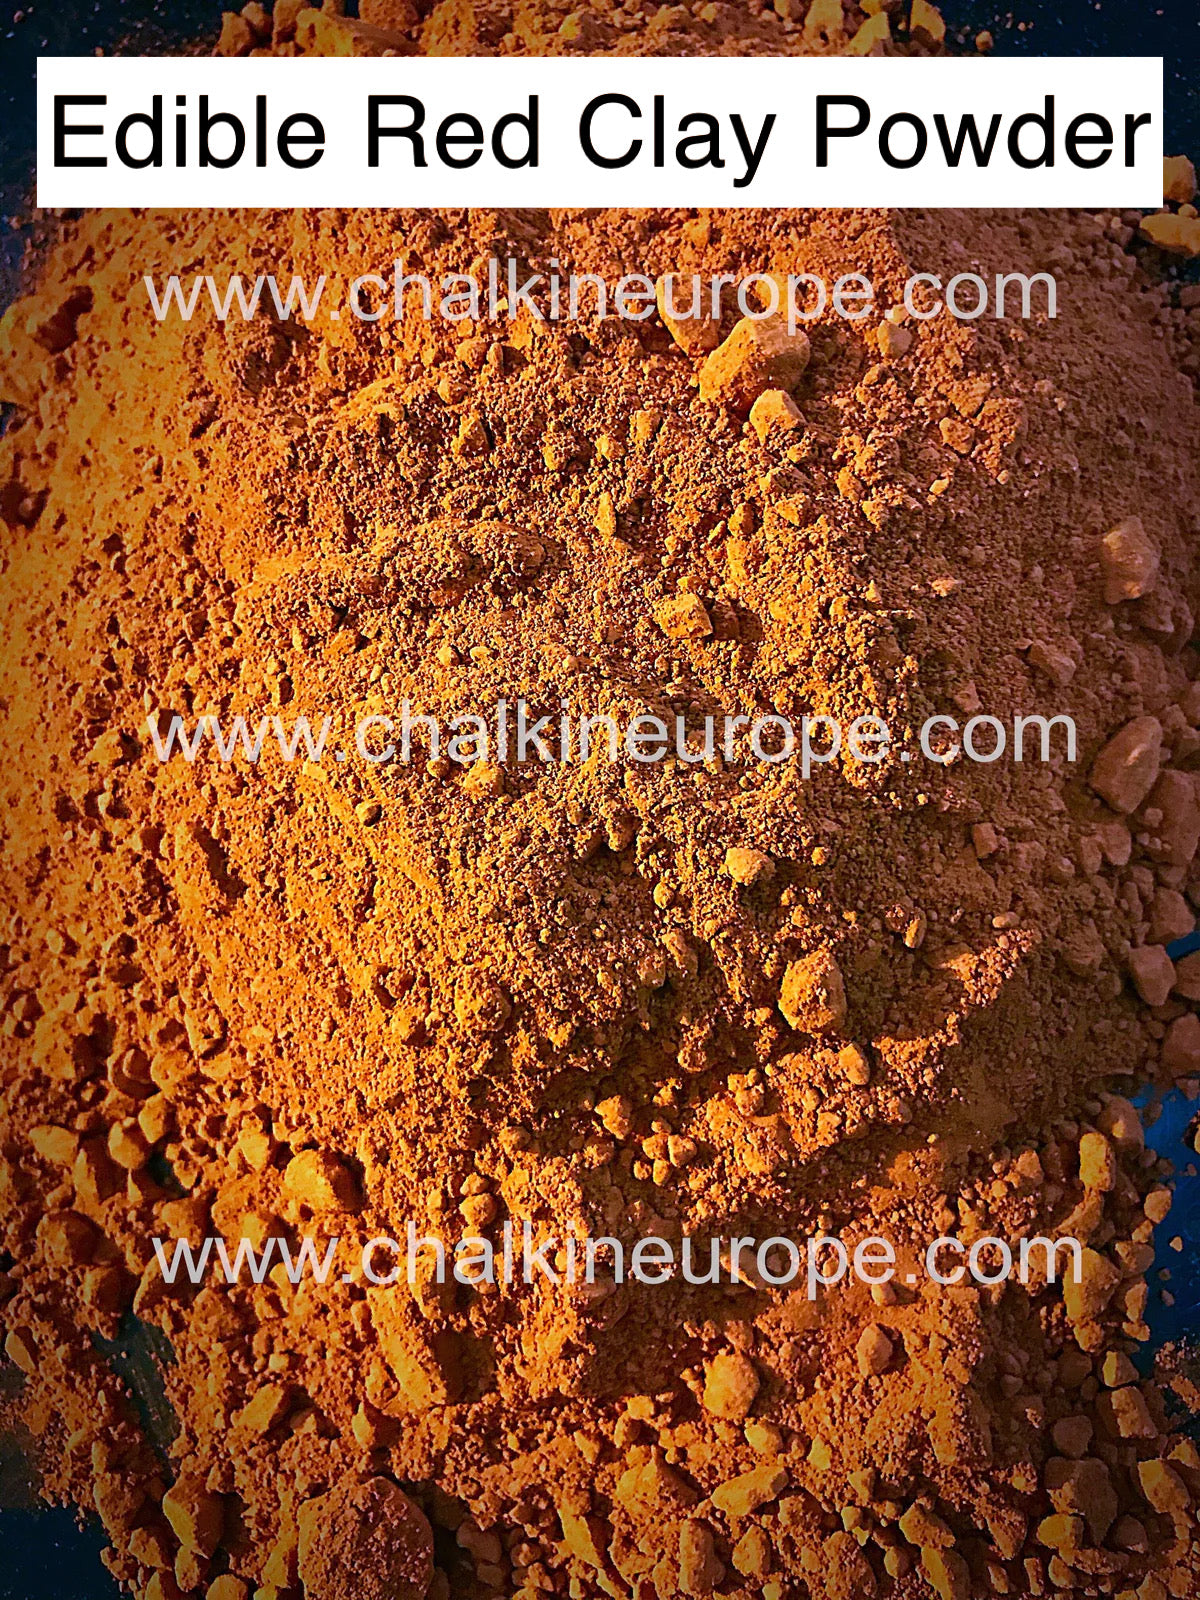 Edible red clay powder - Chalkineurope